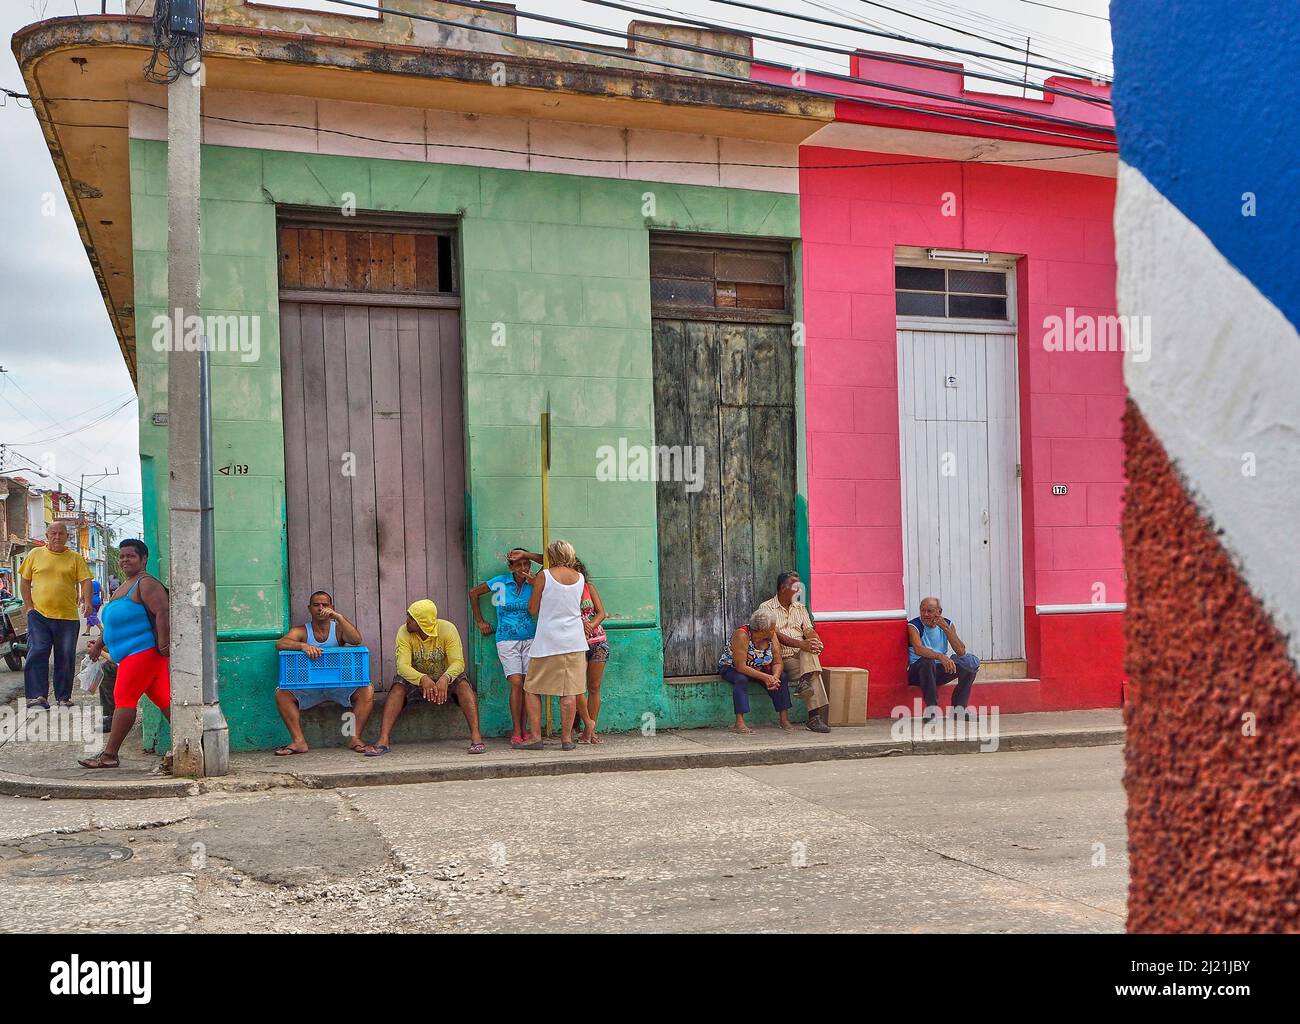 People wait for a grocery to open, Cuba, Sancti Spiritus, Trinidad Stock Photo